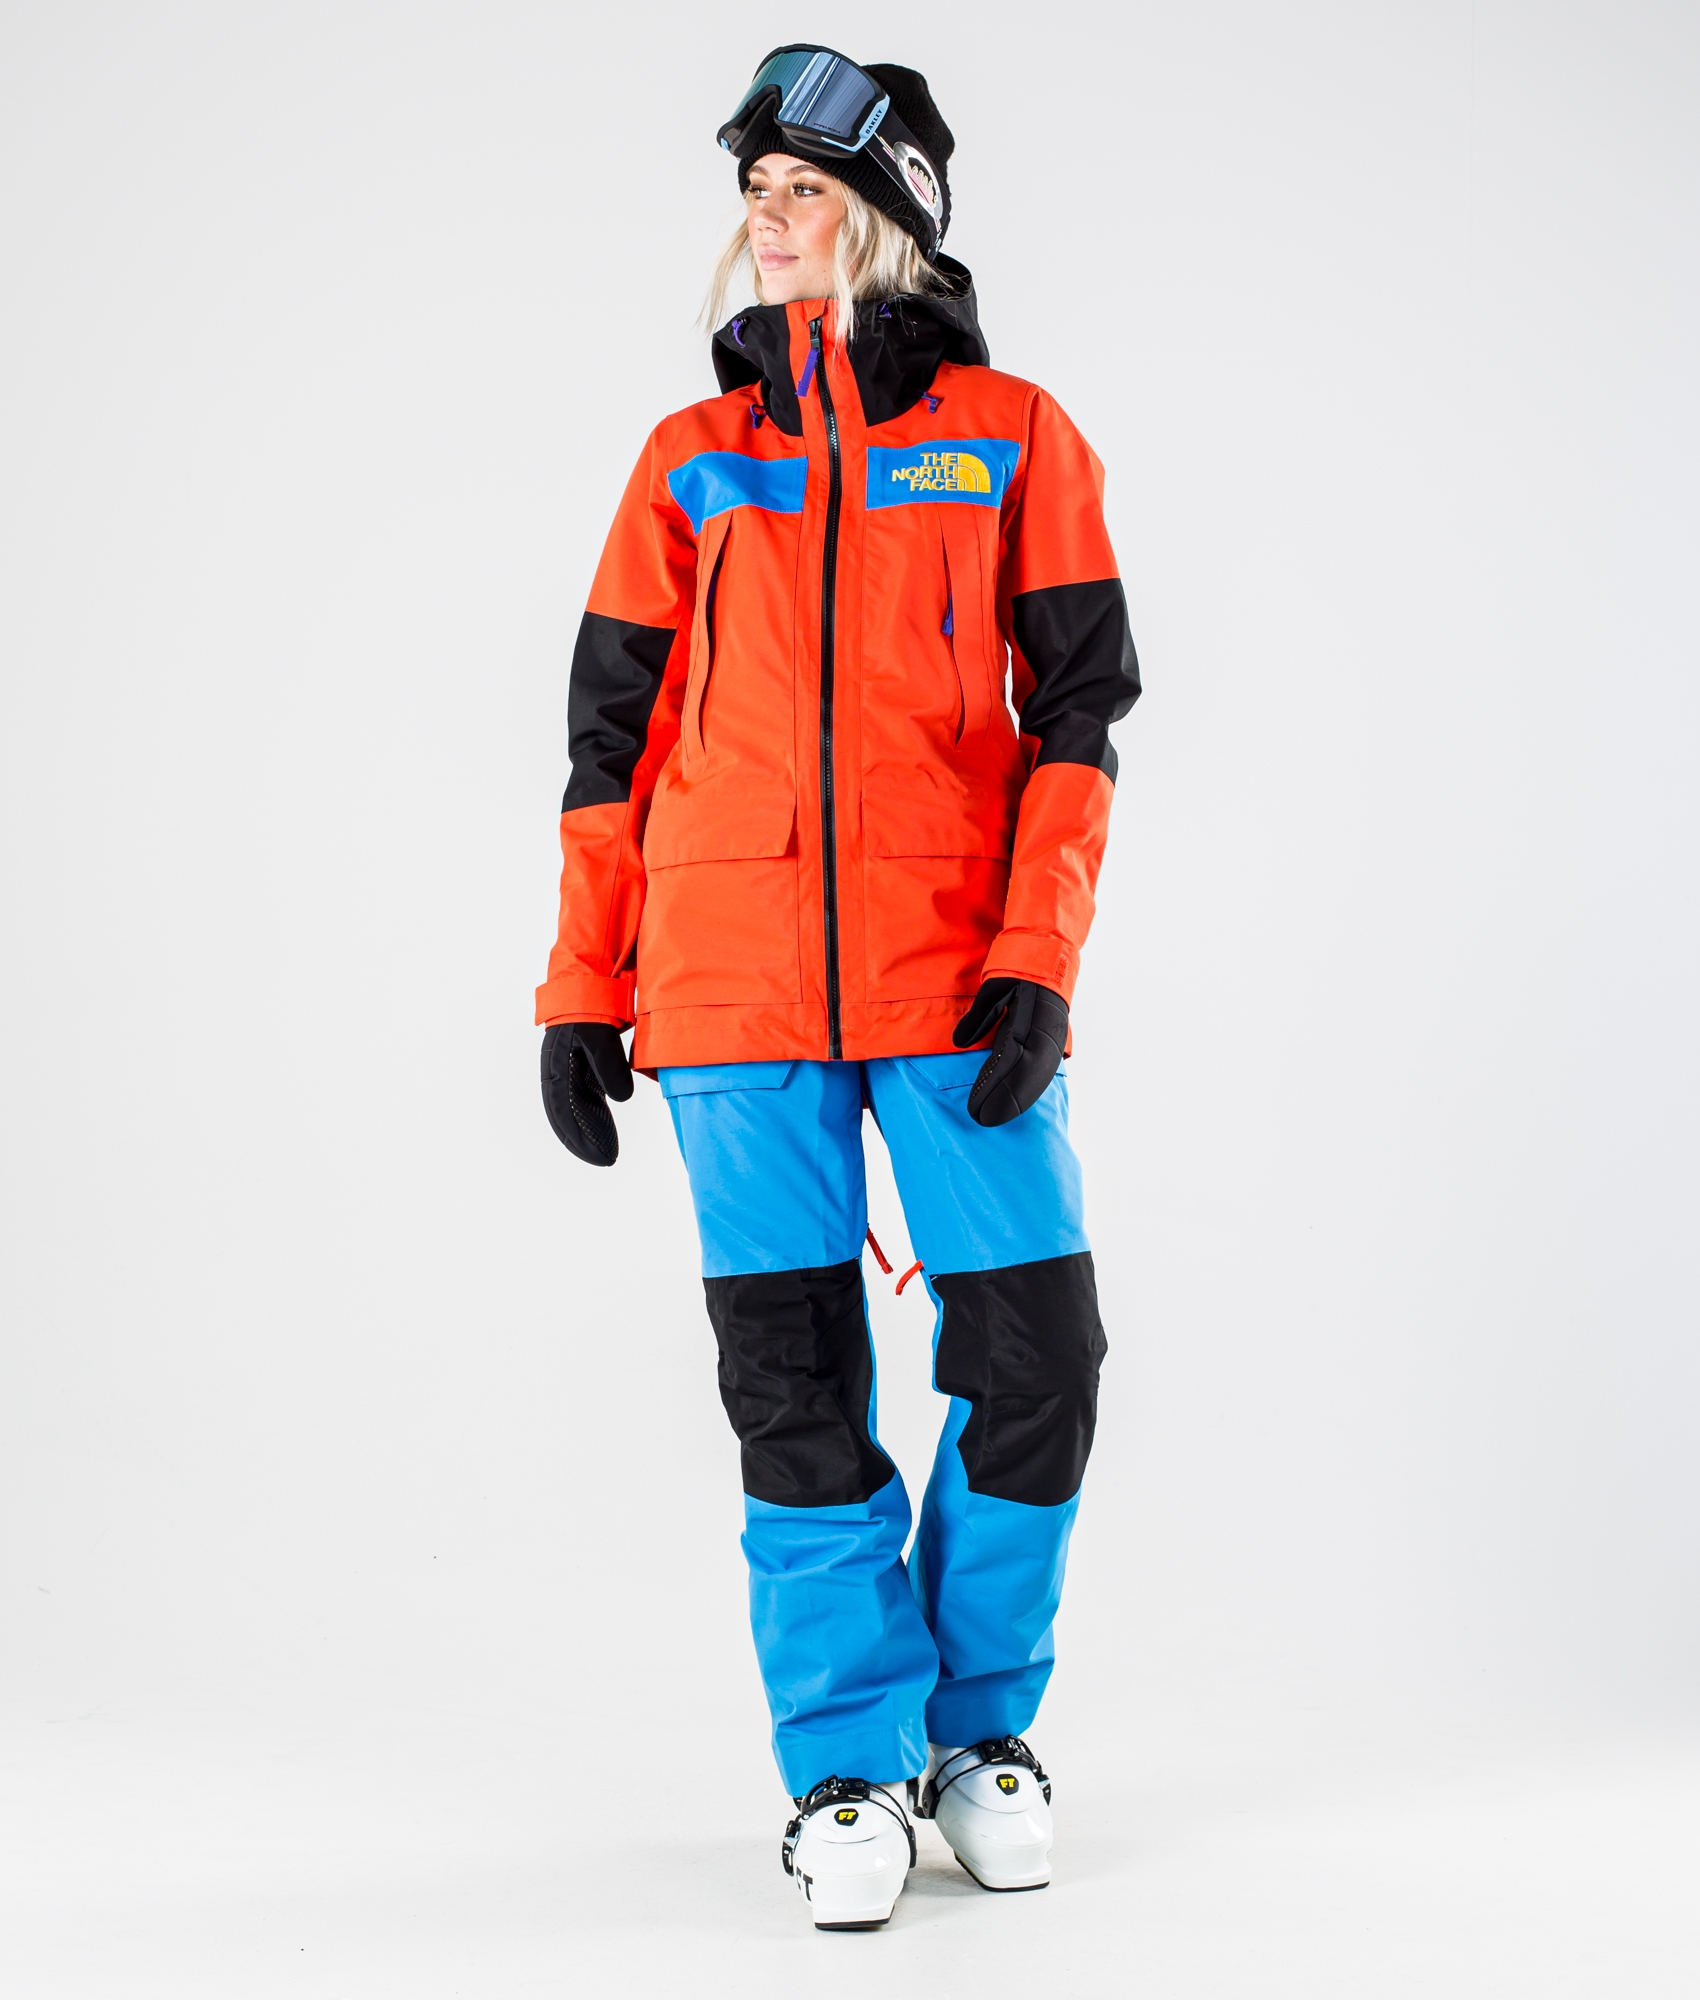 The North Face Team Kit Ski Jacket 